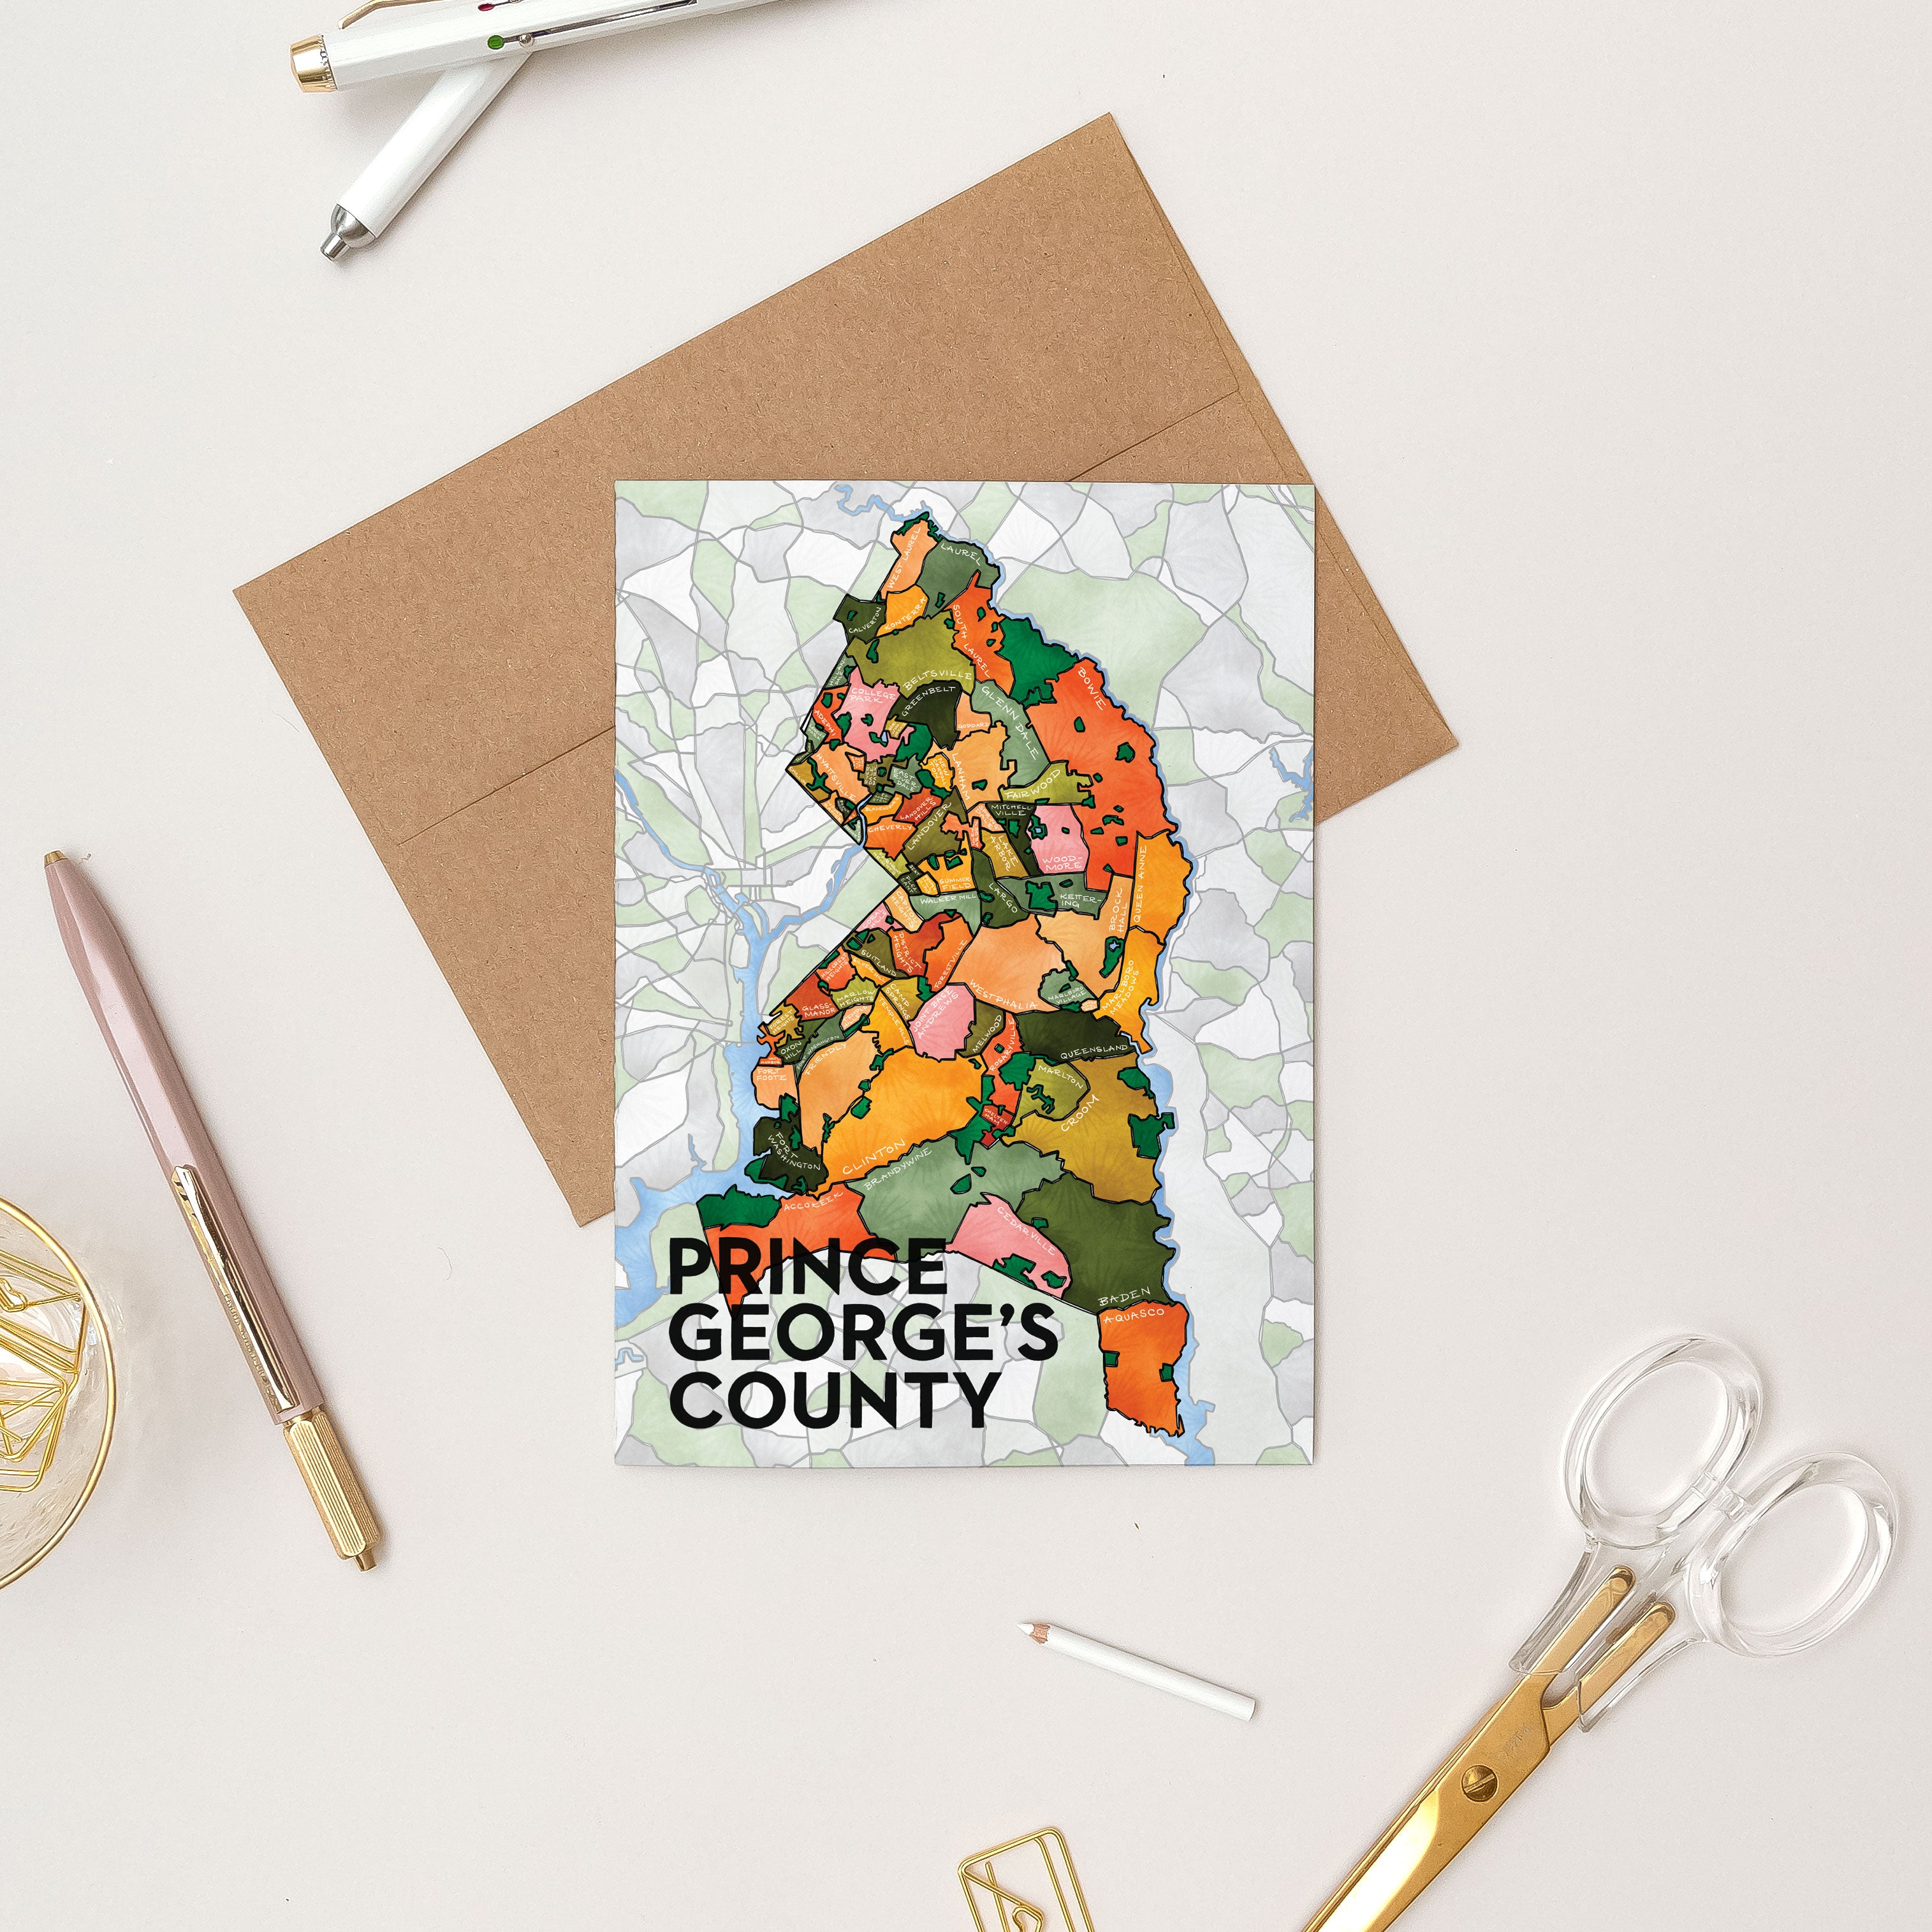 Prince George's County Greeting Card